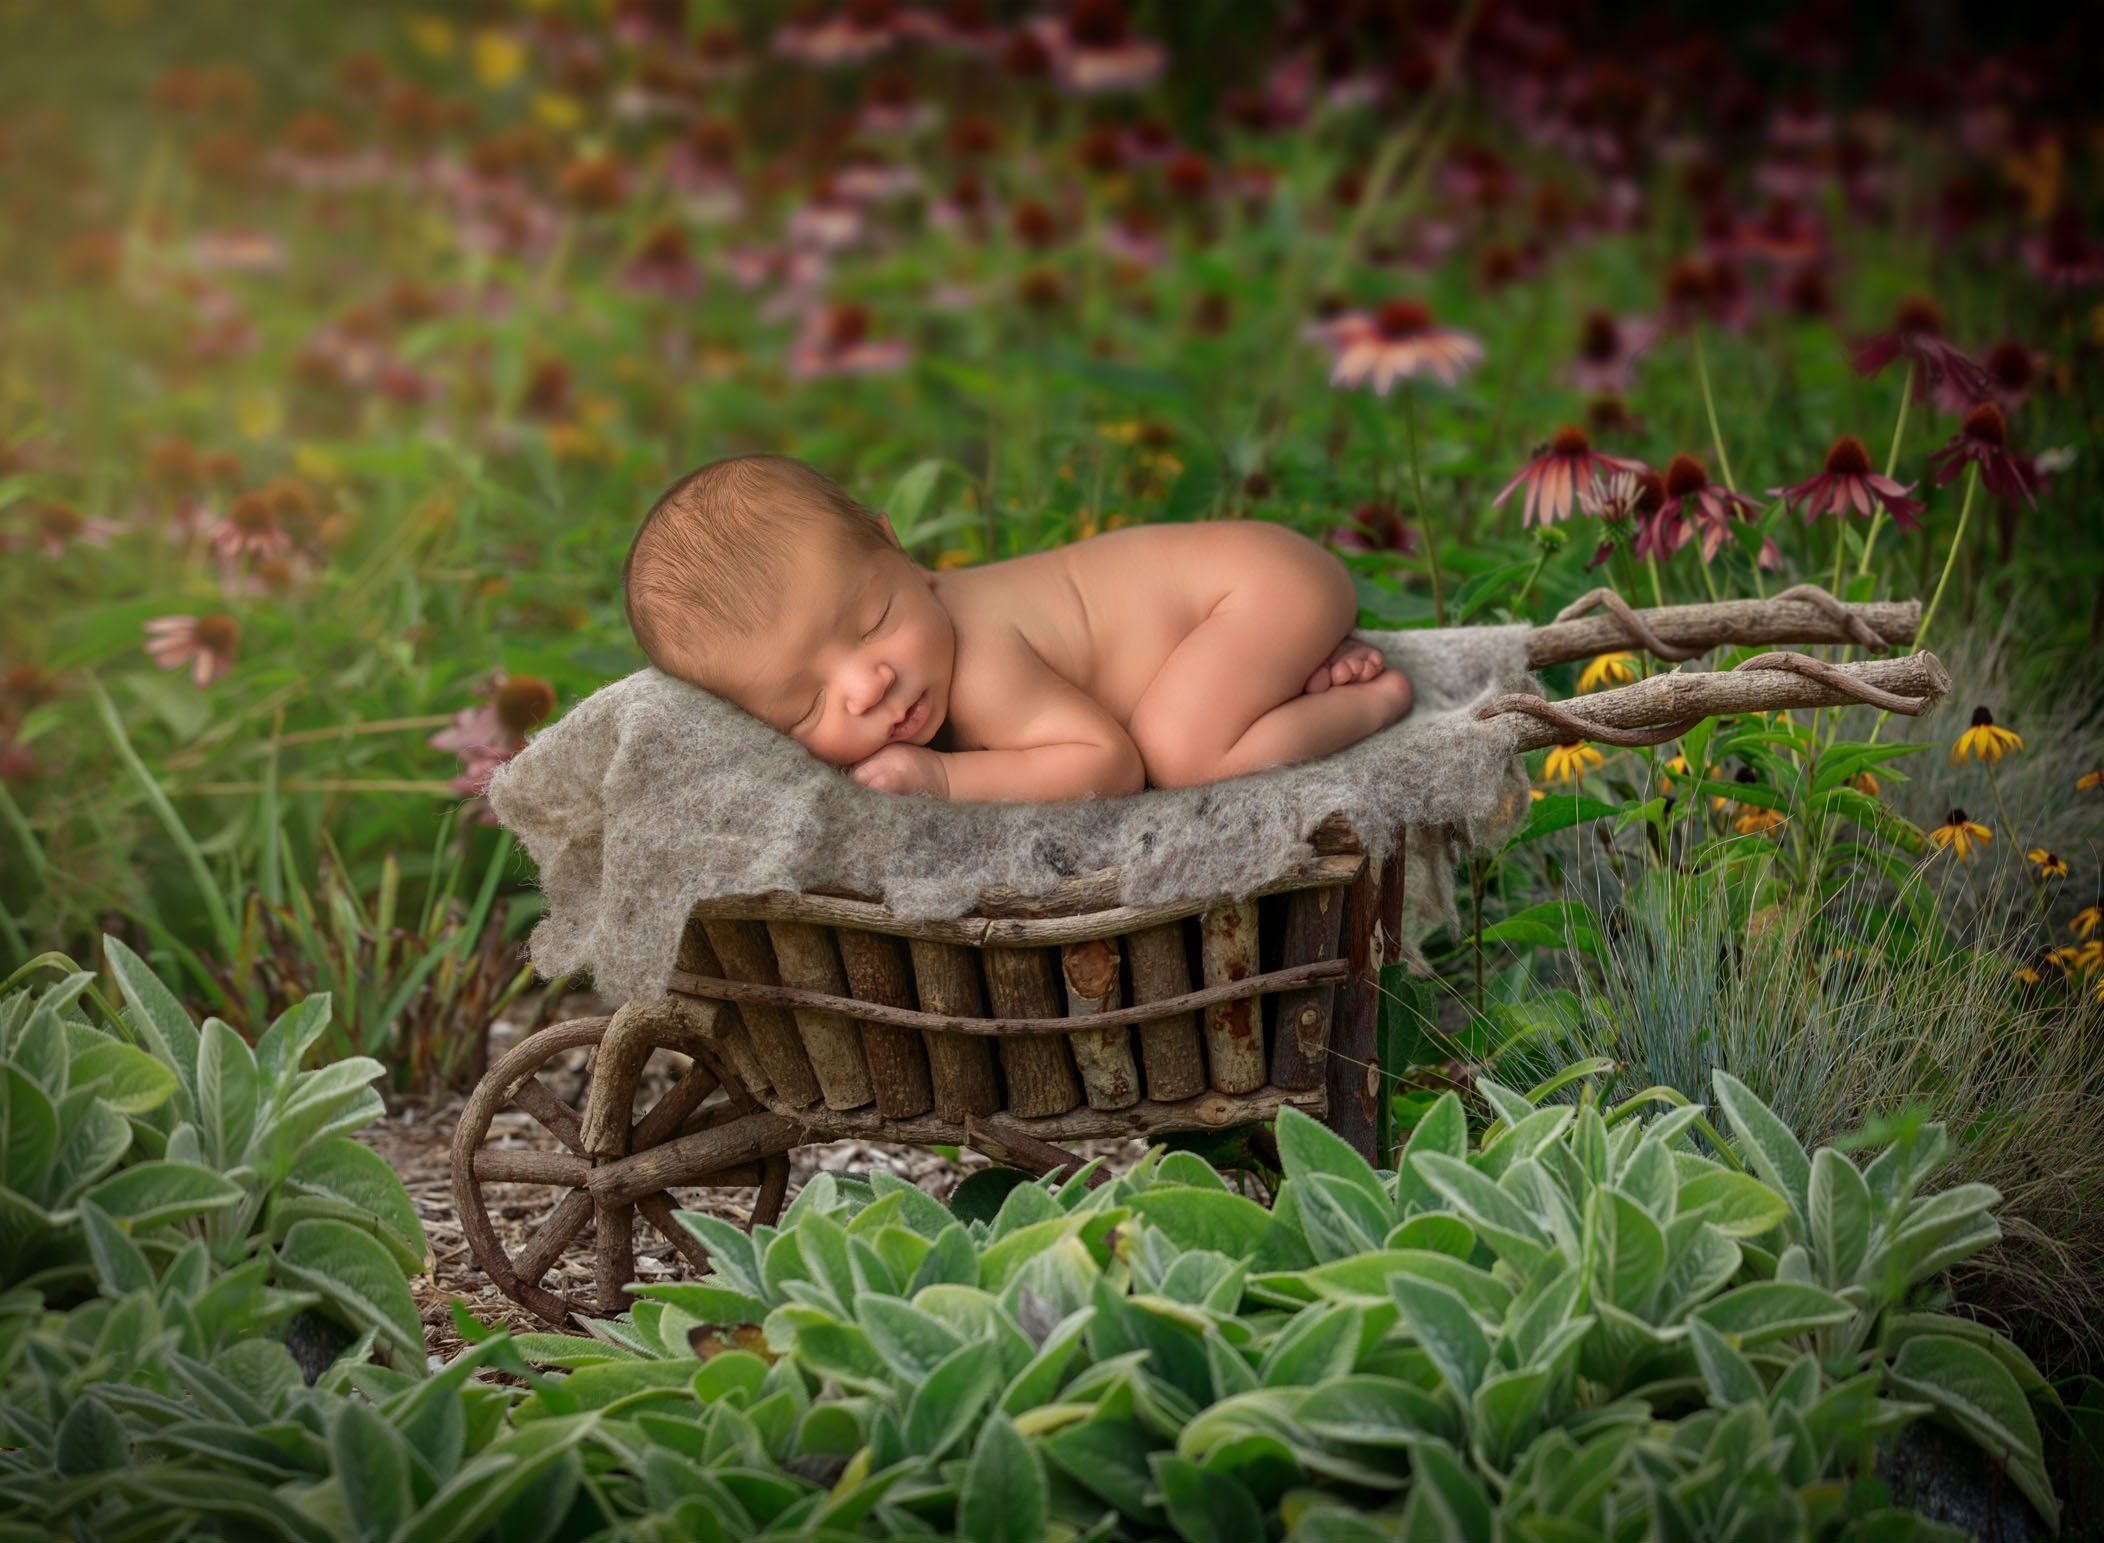 newborn baby sleeping on a wooden wheelbarrow in the garden newborn baby sleeping on a wooden wheelbarrow in the garden newborn baby sleeping on a wooden wheelbarrow in the garden